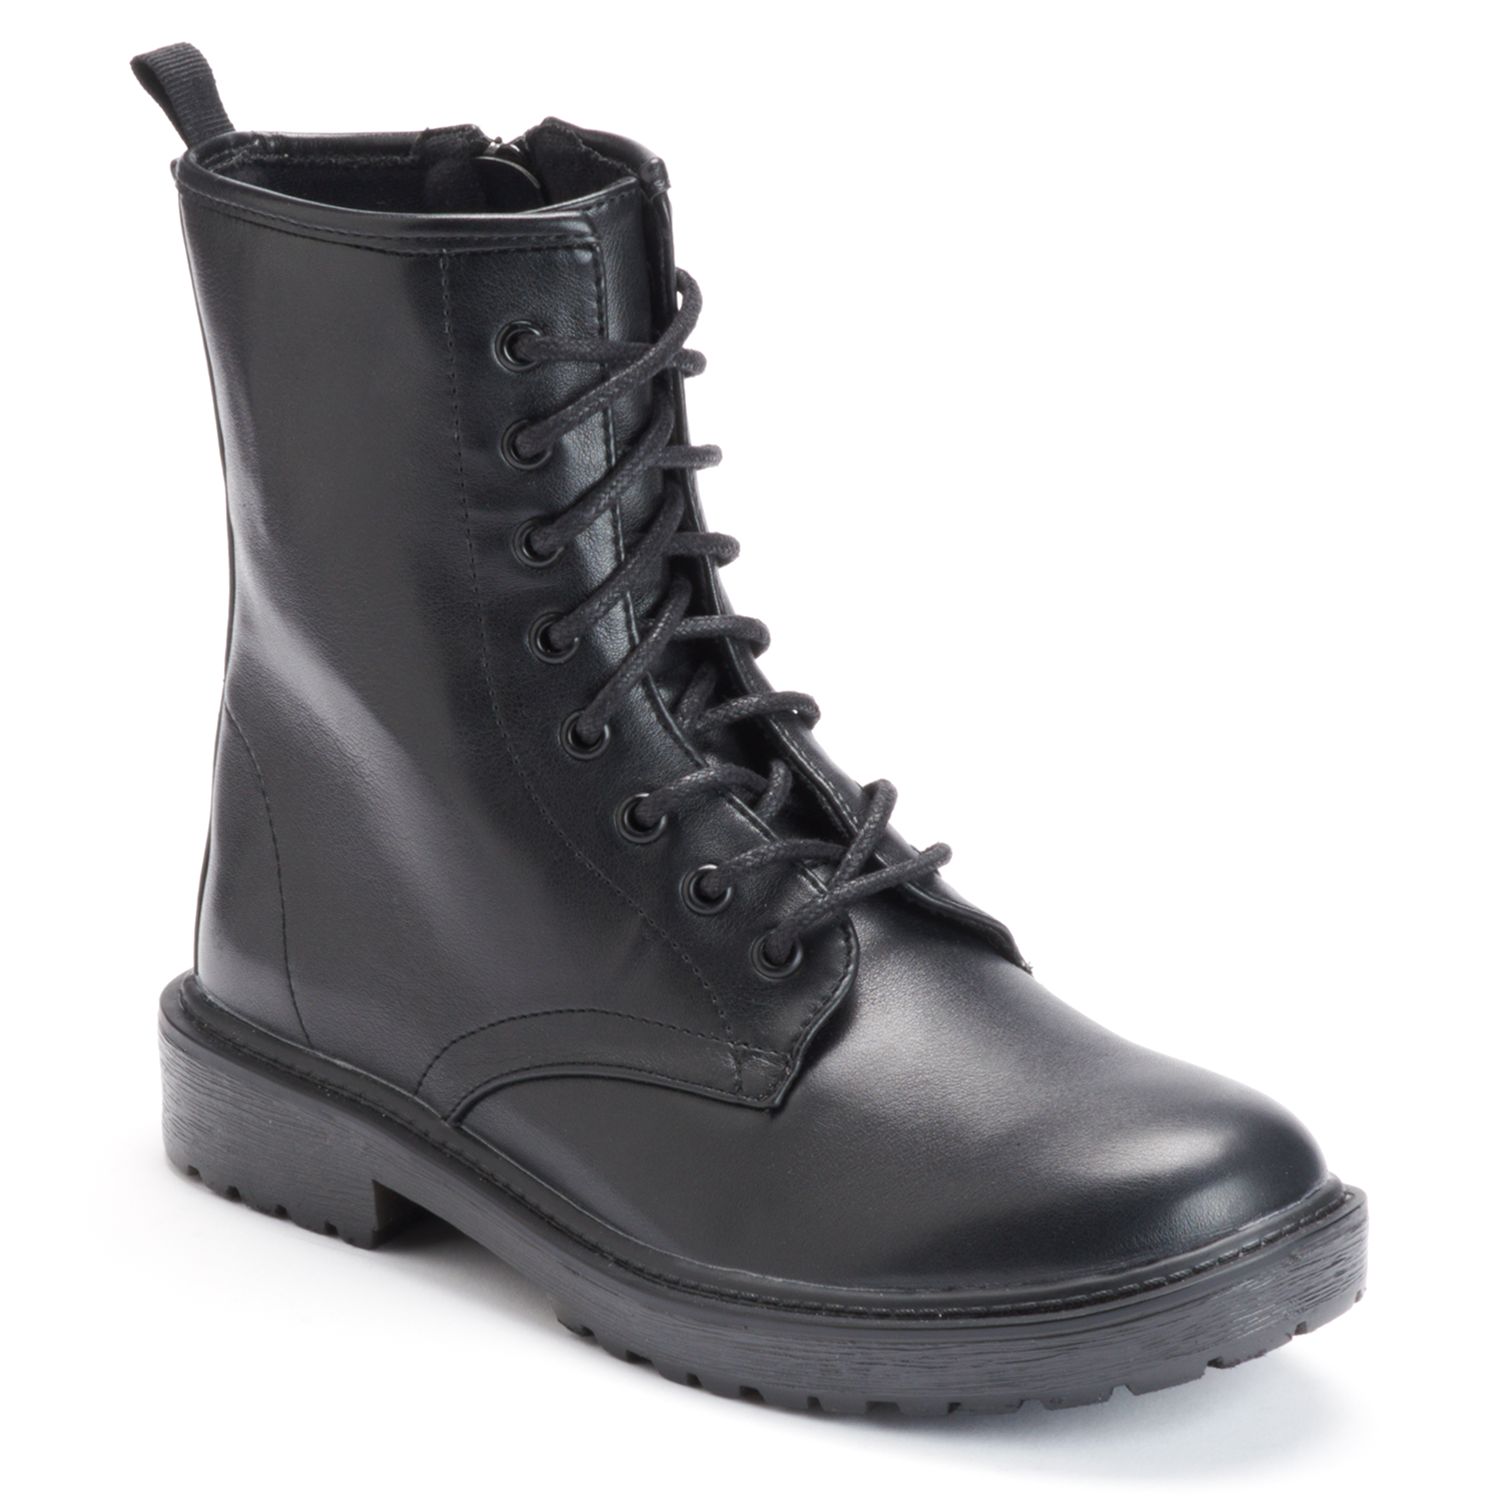 mudd combat boots